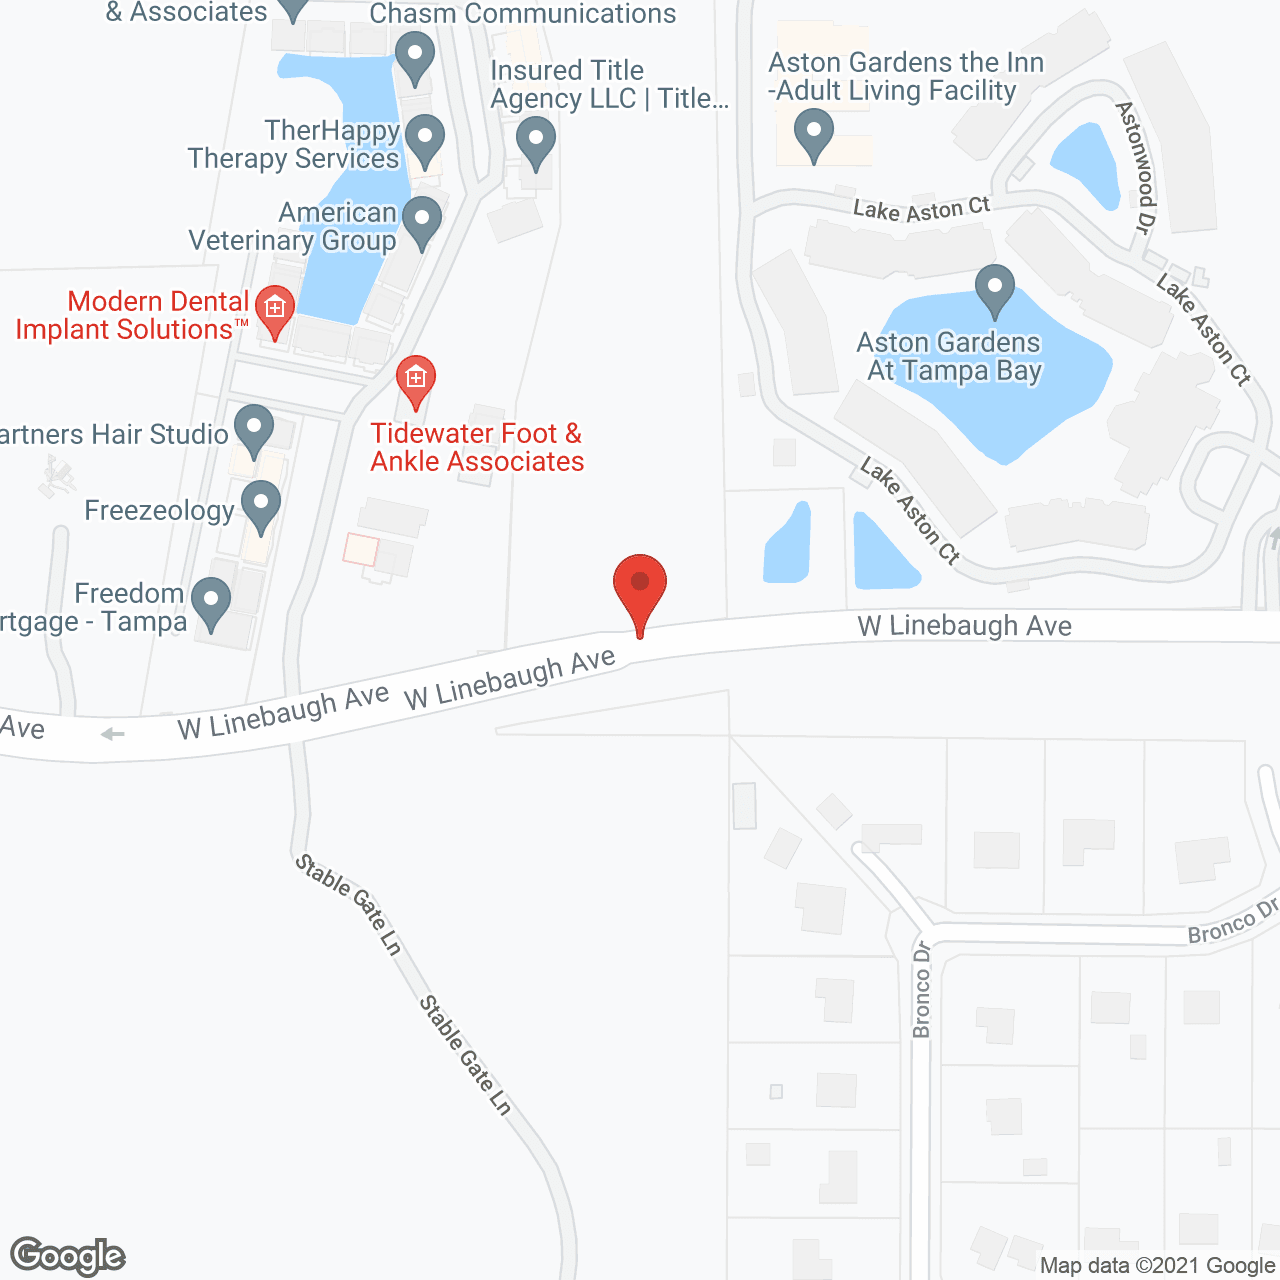 Aston Gardens at Tampa Bay in google map